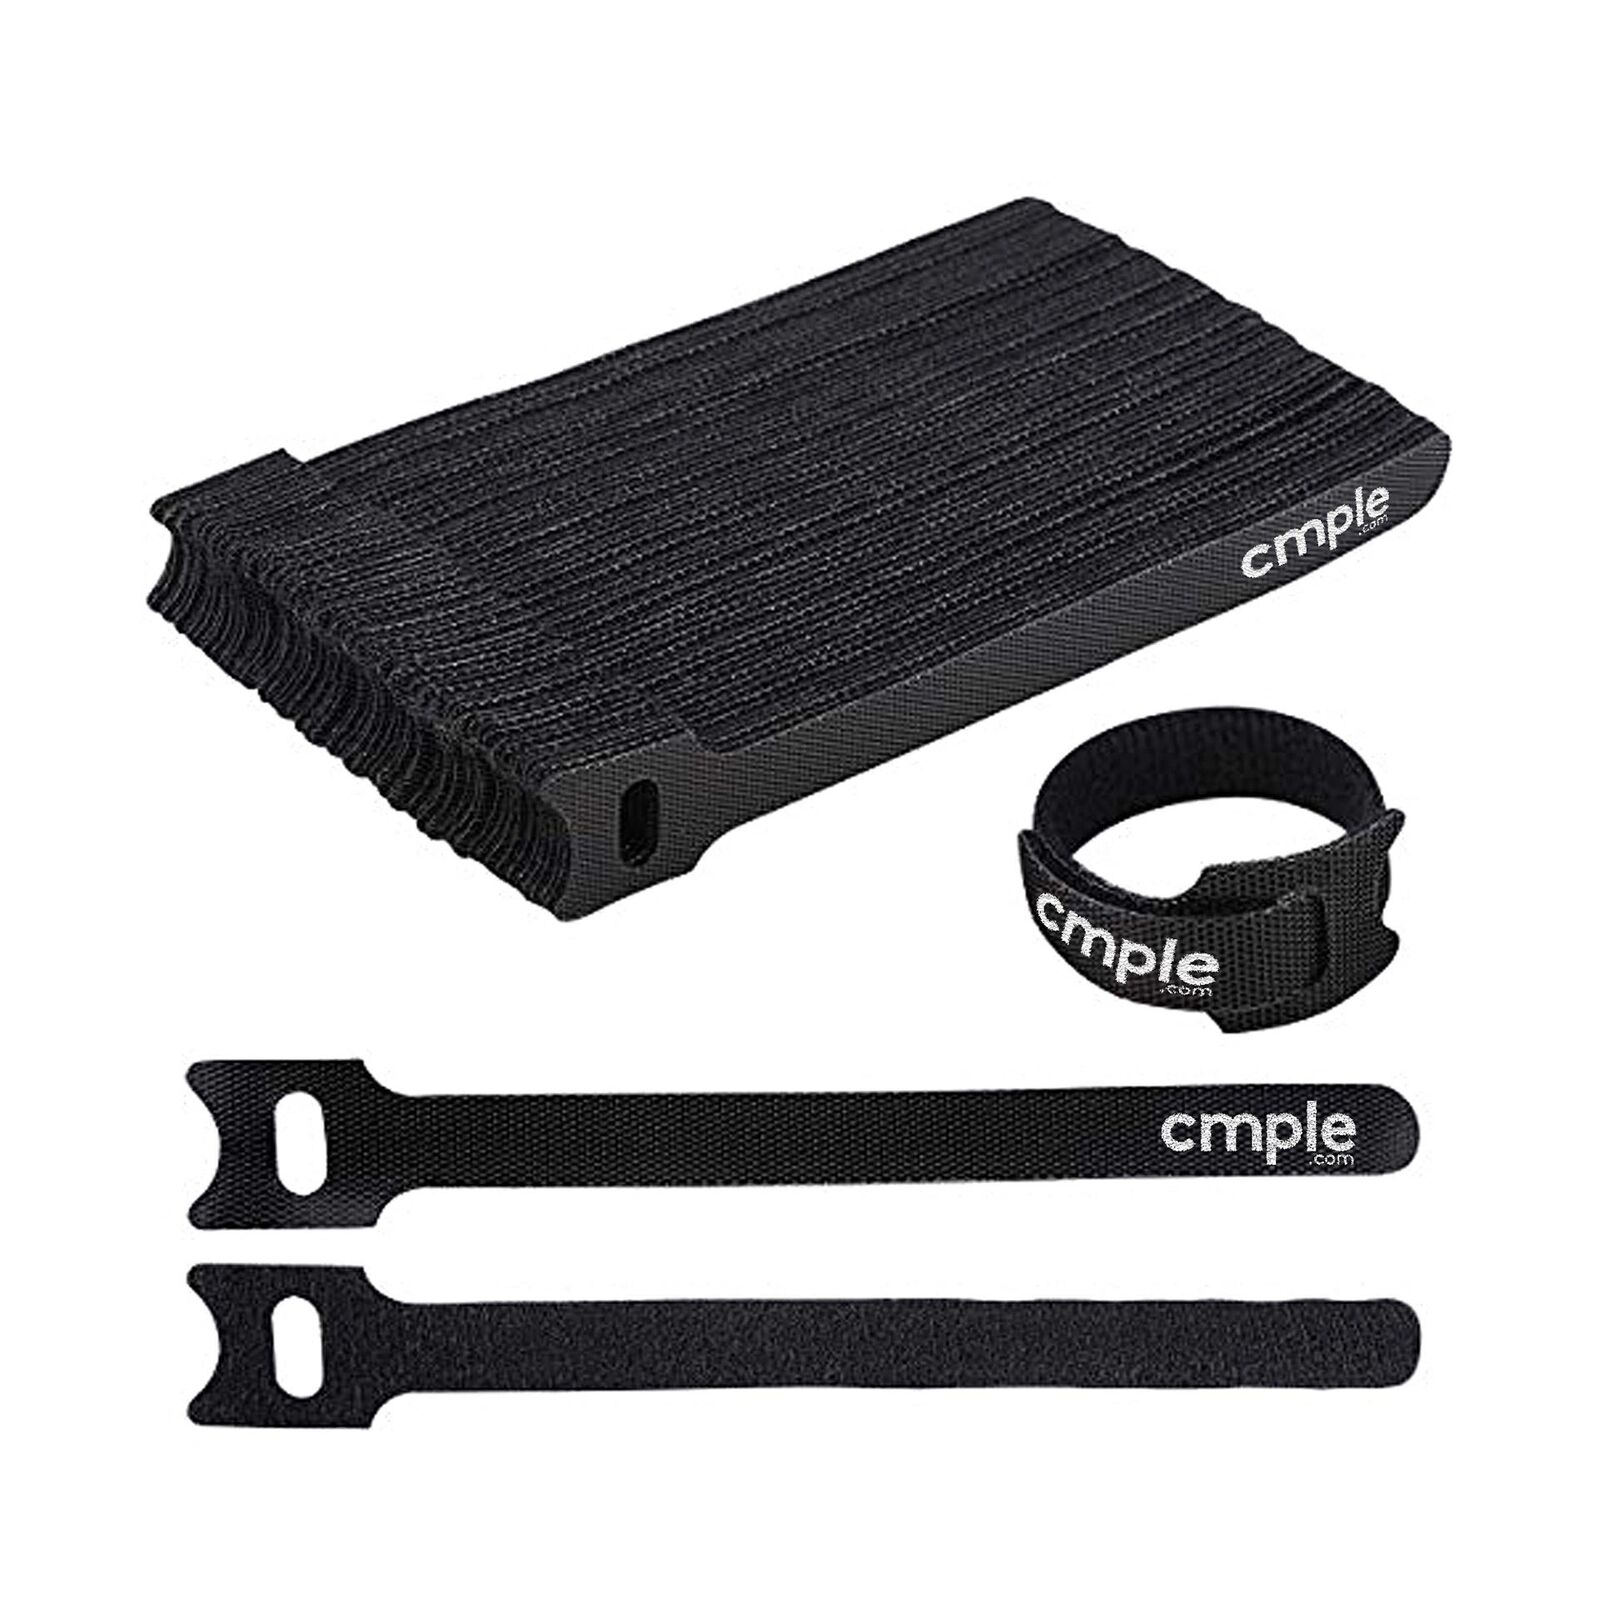 50PCS Reusable Cable Ties Velcro Adjustable Cord Organizer Rip-Tie 6-inch Black